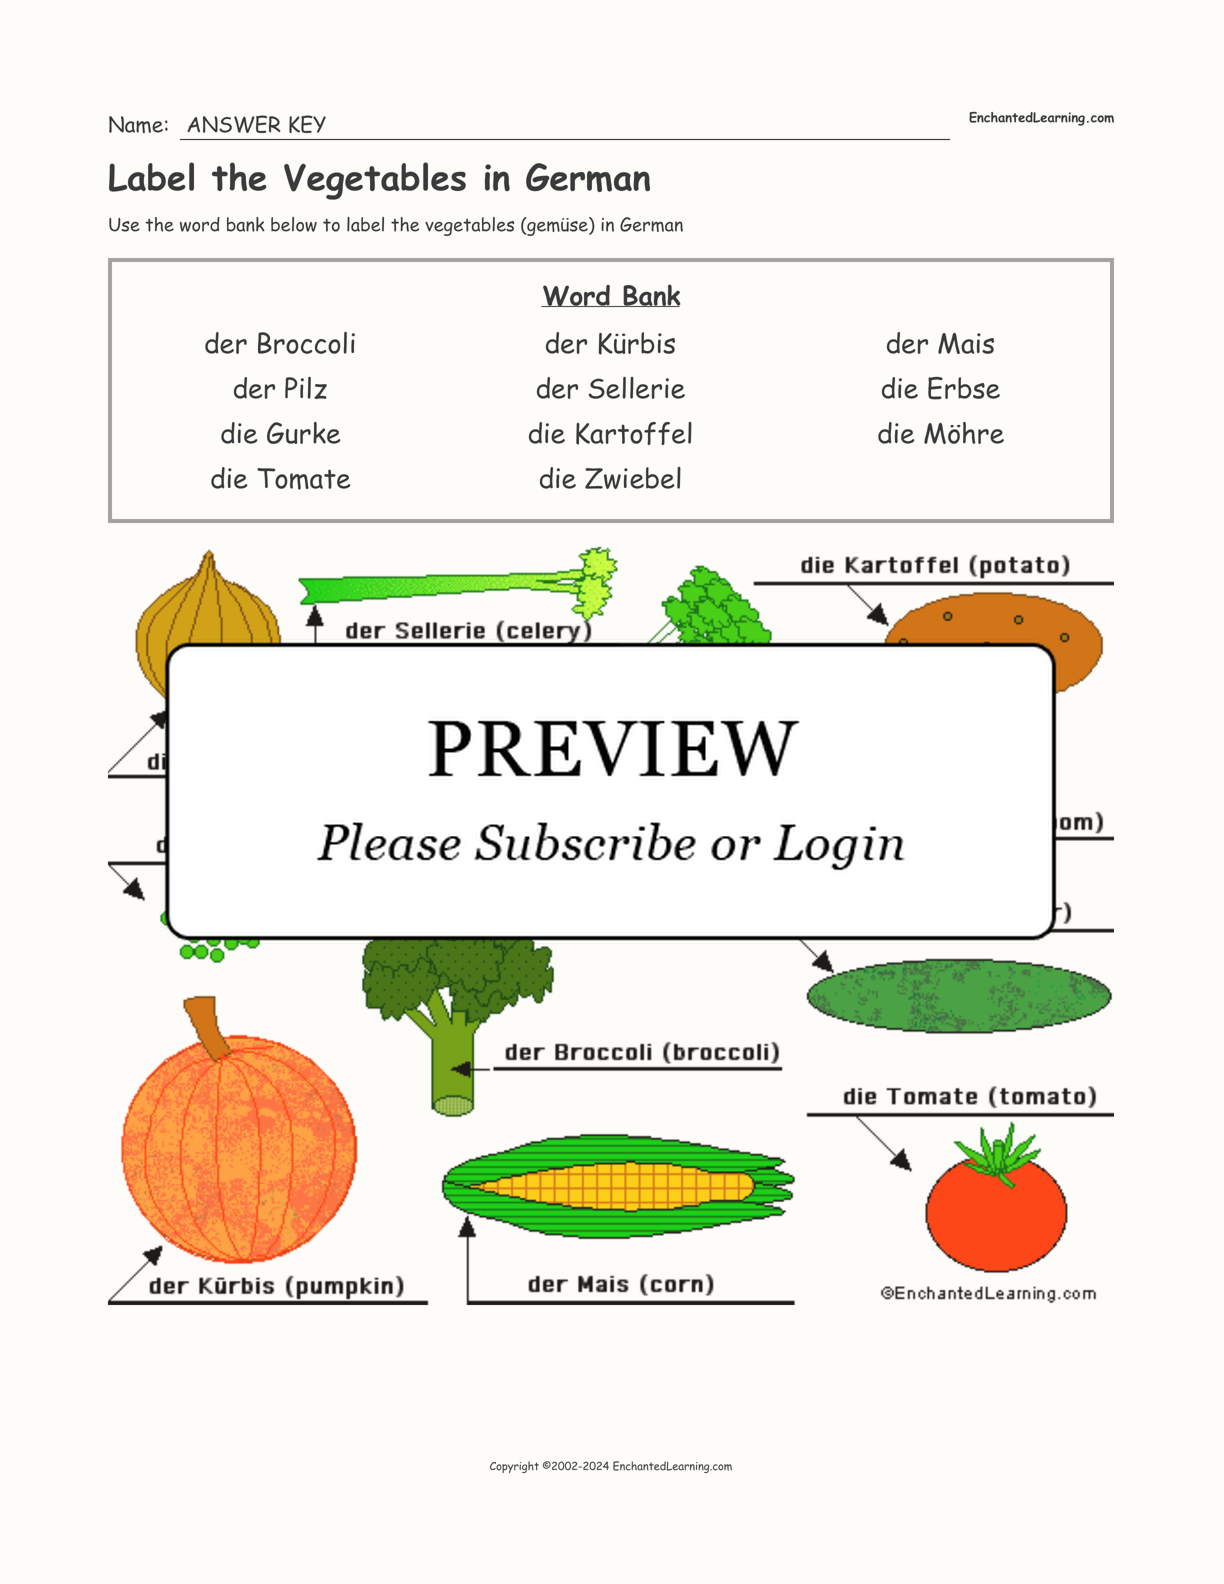 Label the Vegetables in German interactive worksheet page 2